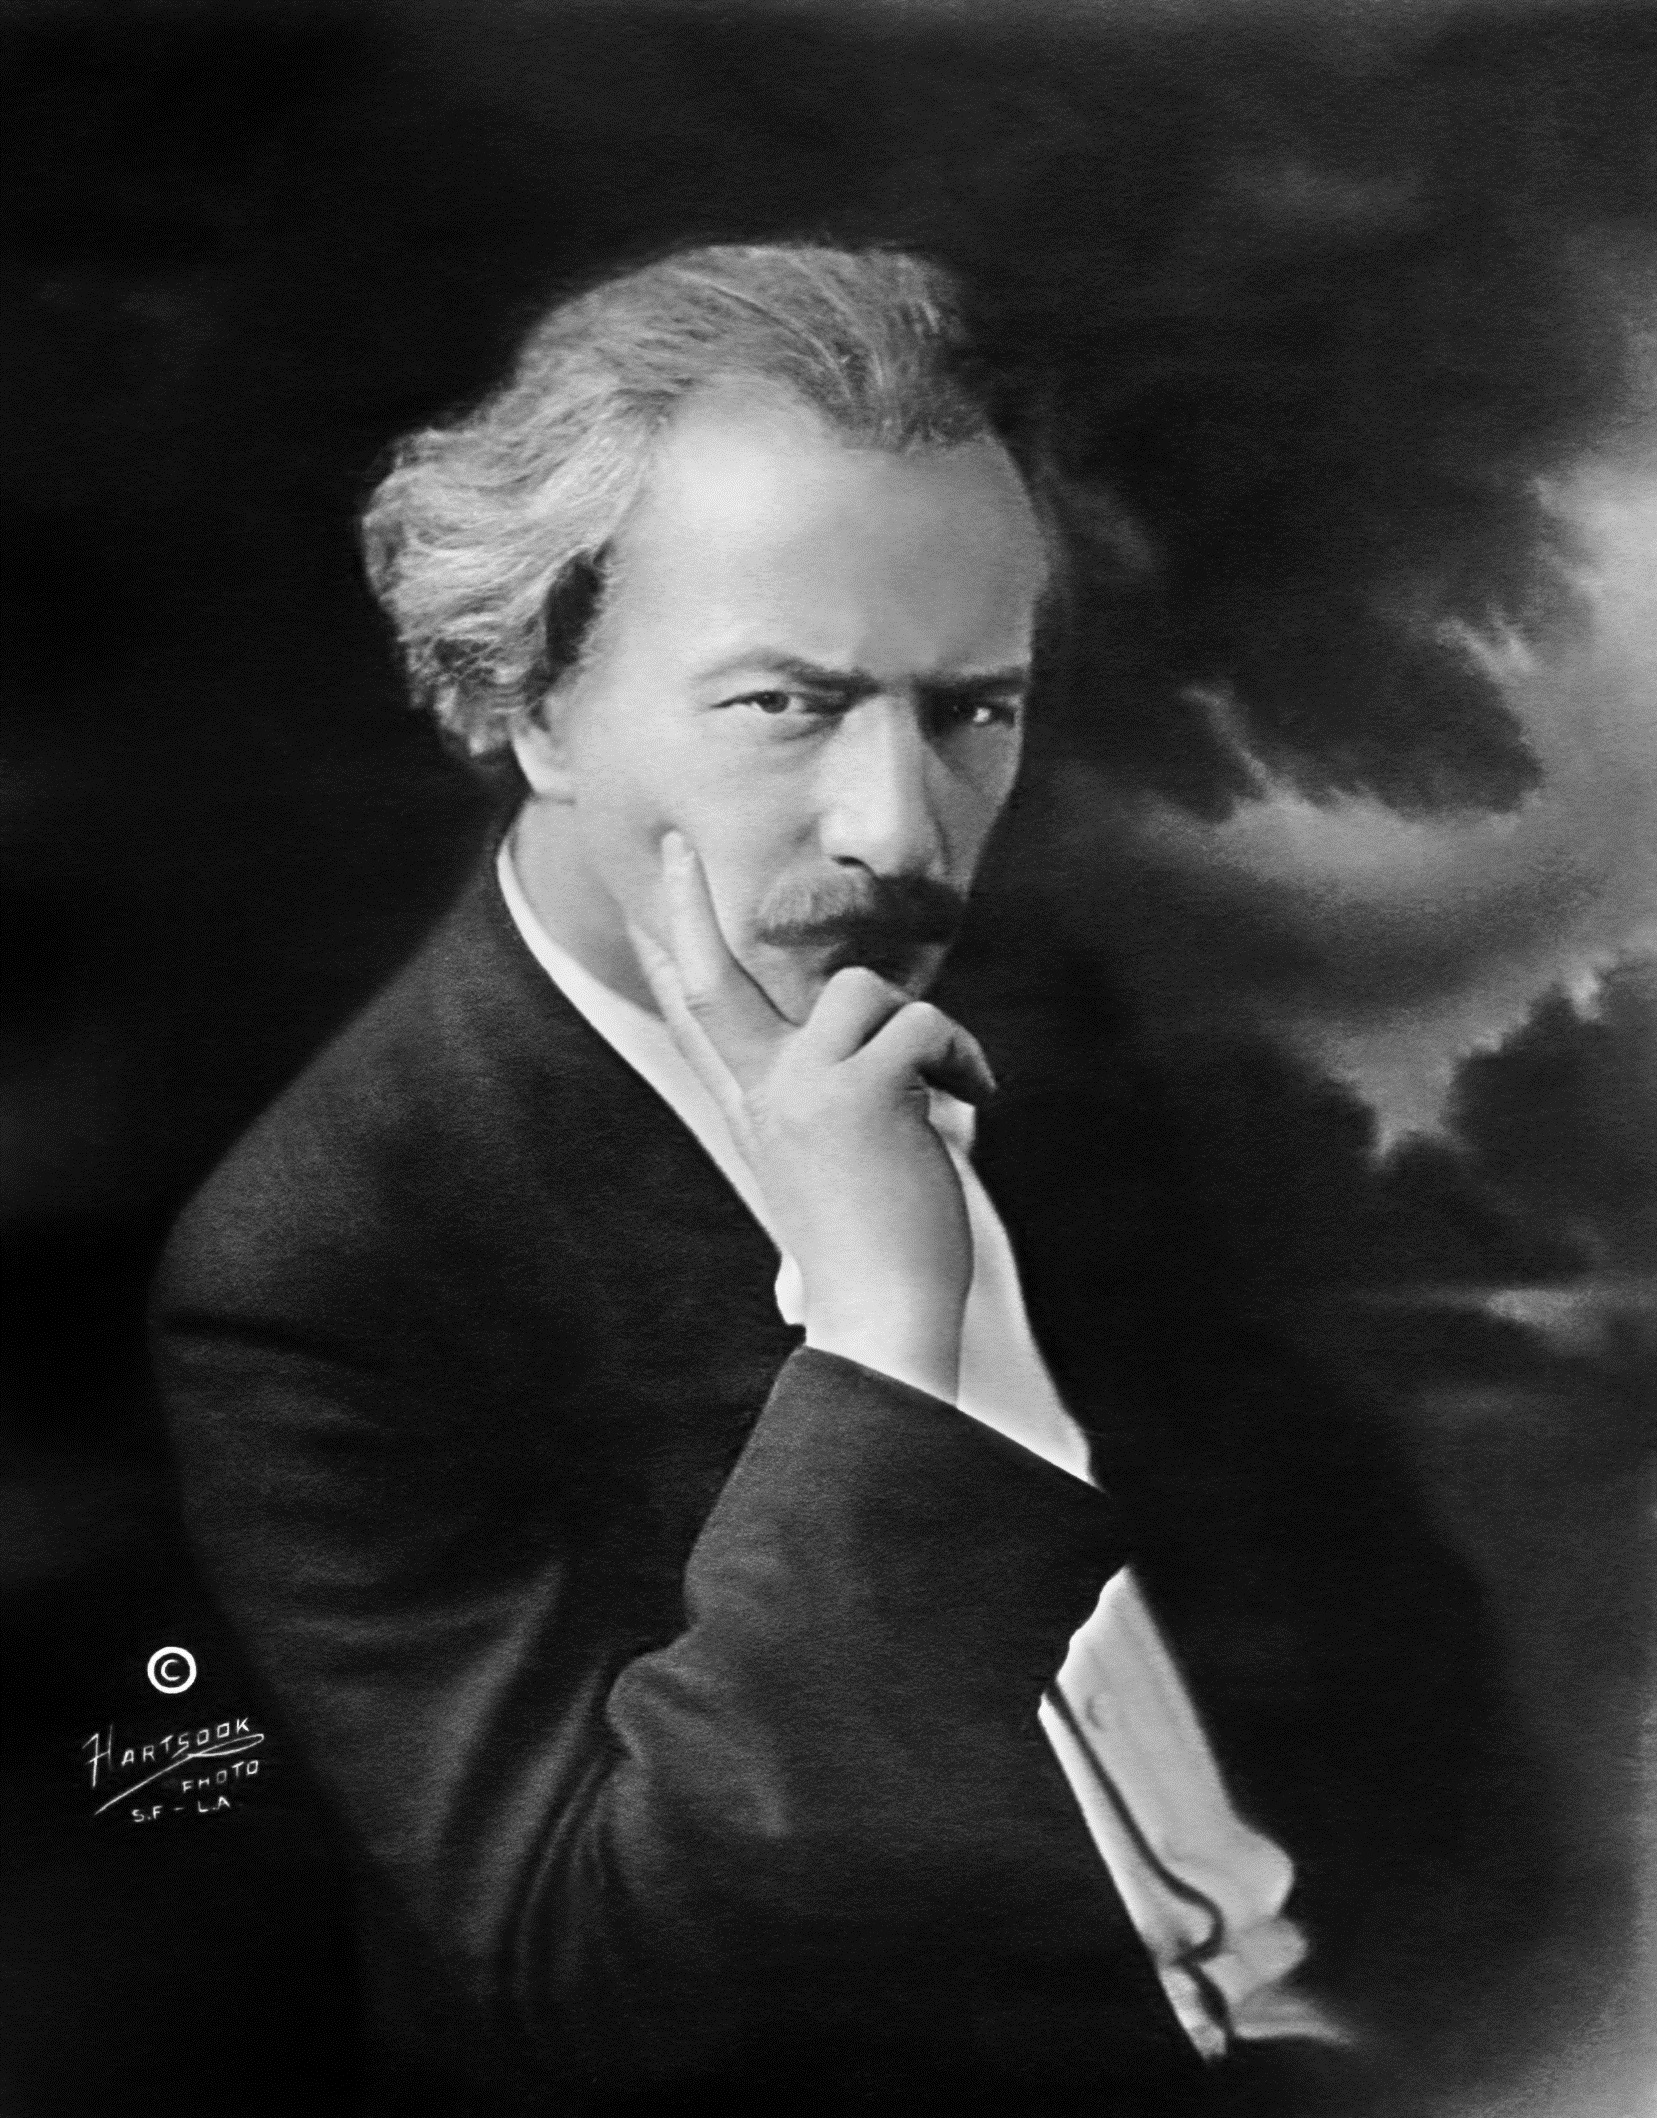 Ignacy Jan Paderewski Biography, Ignacy Jan Paderewski's 